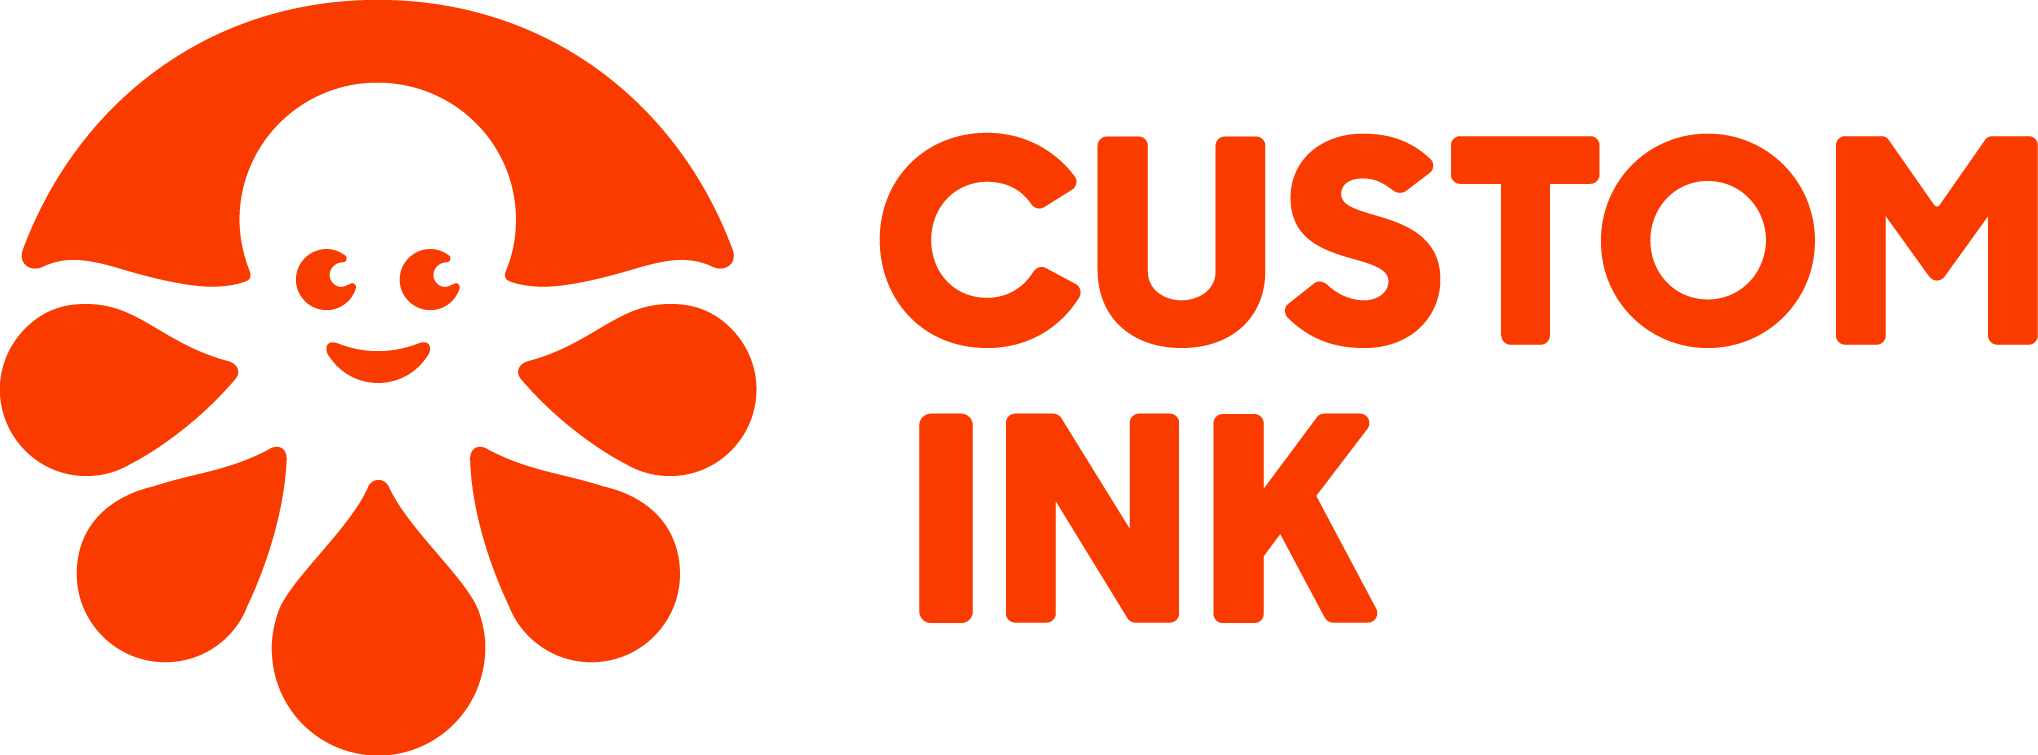 Custom Ink Logo png